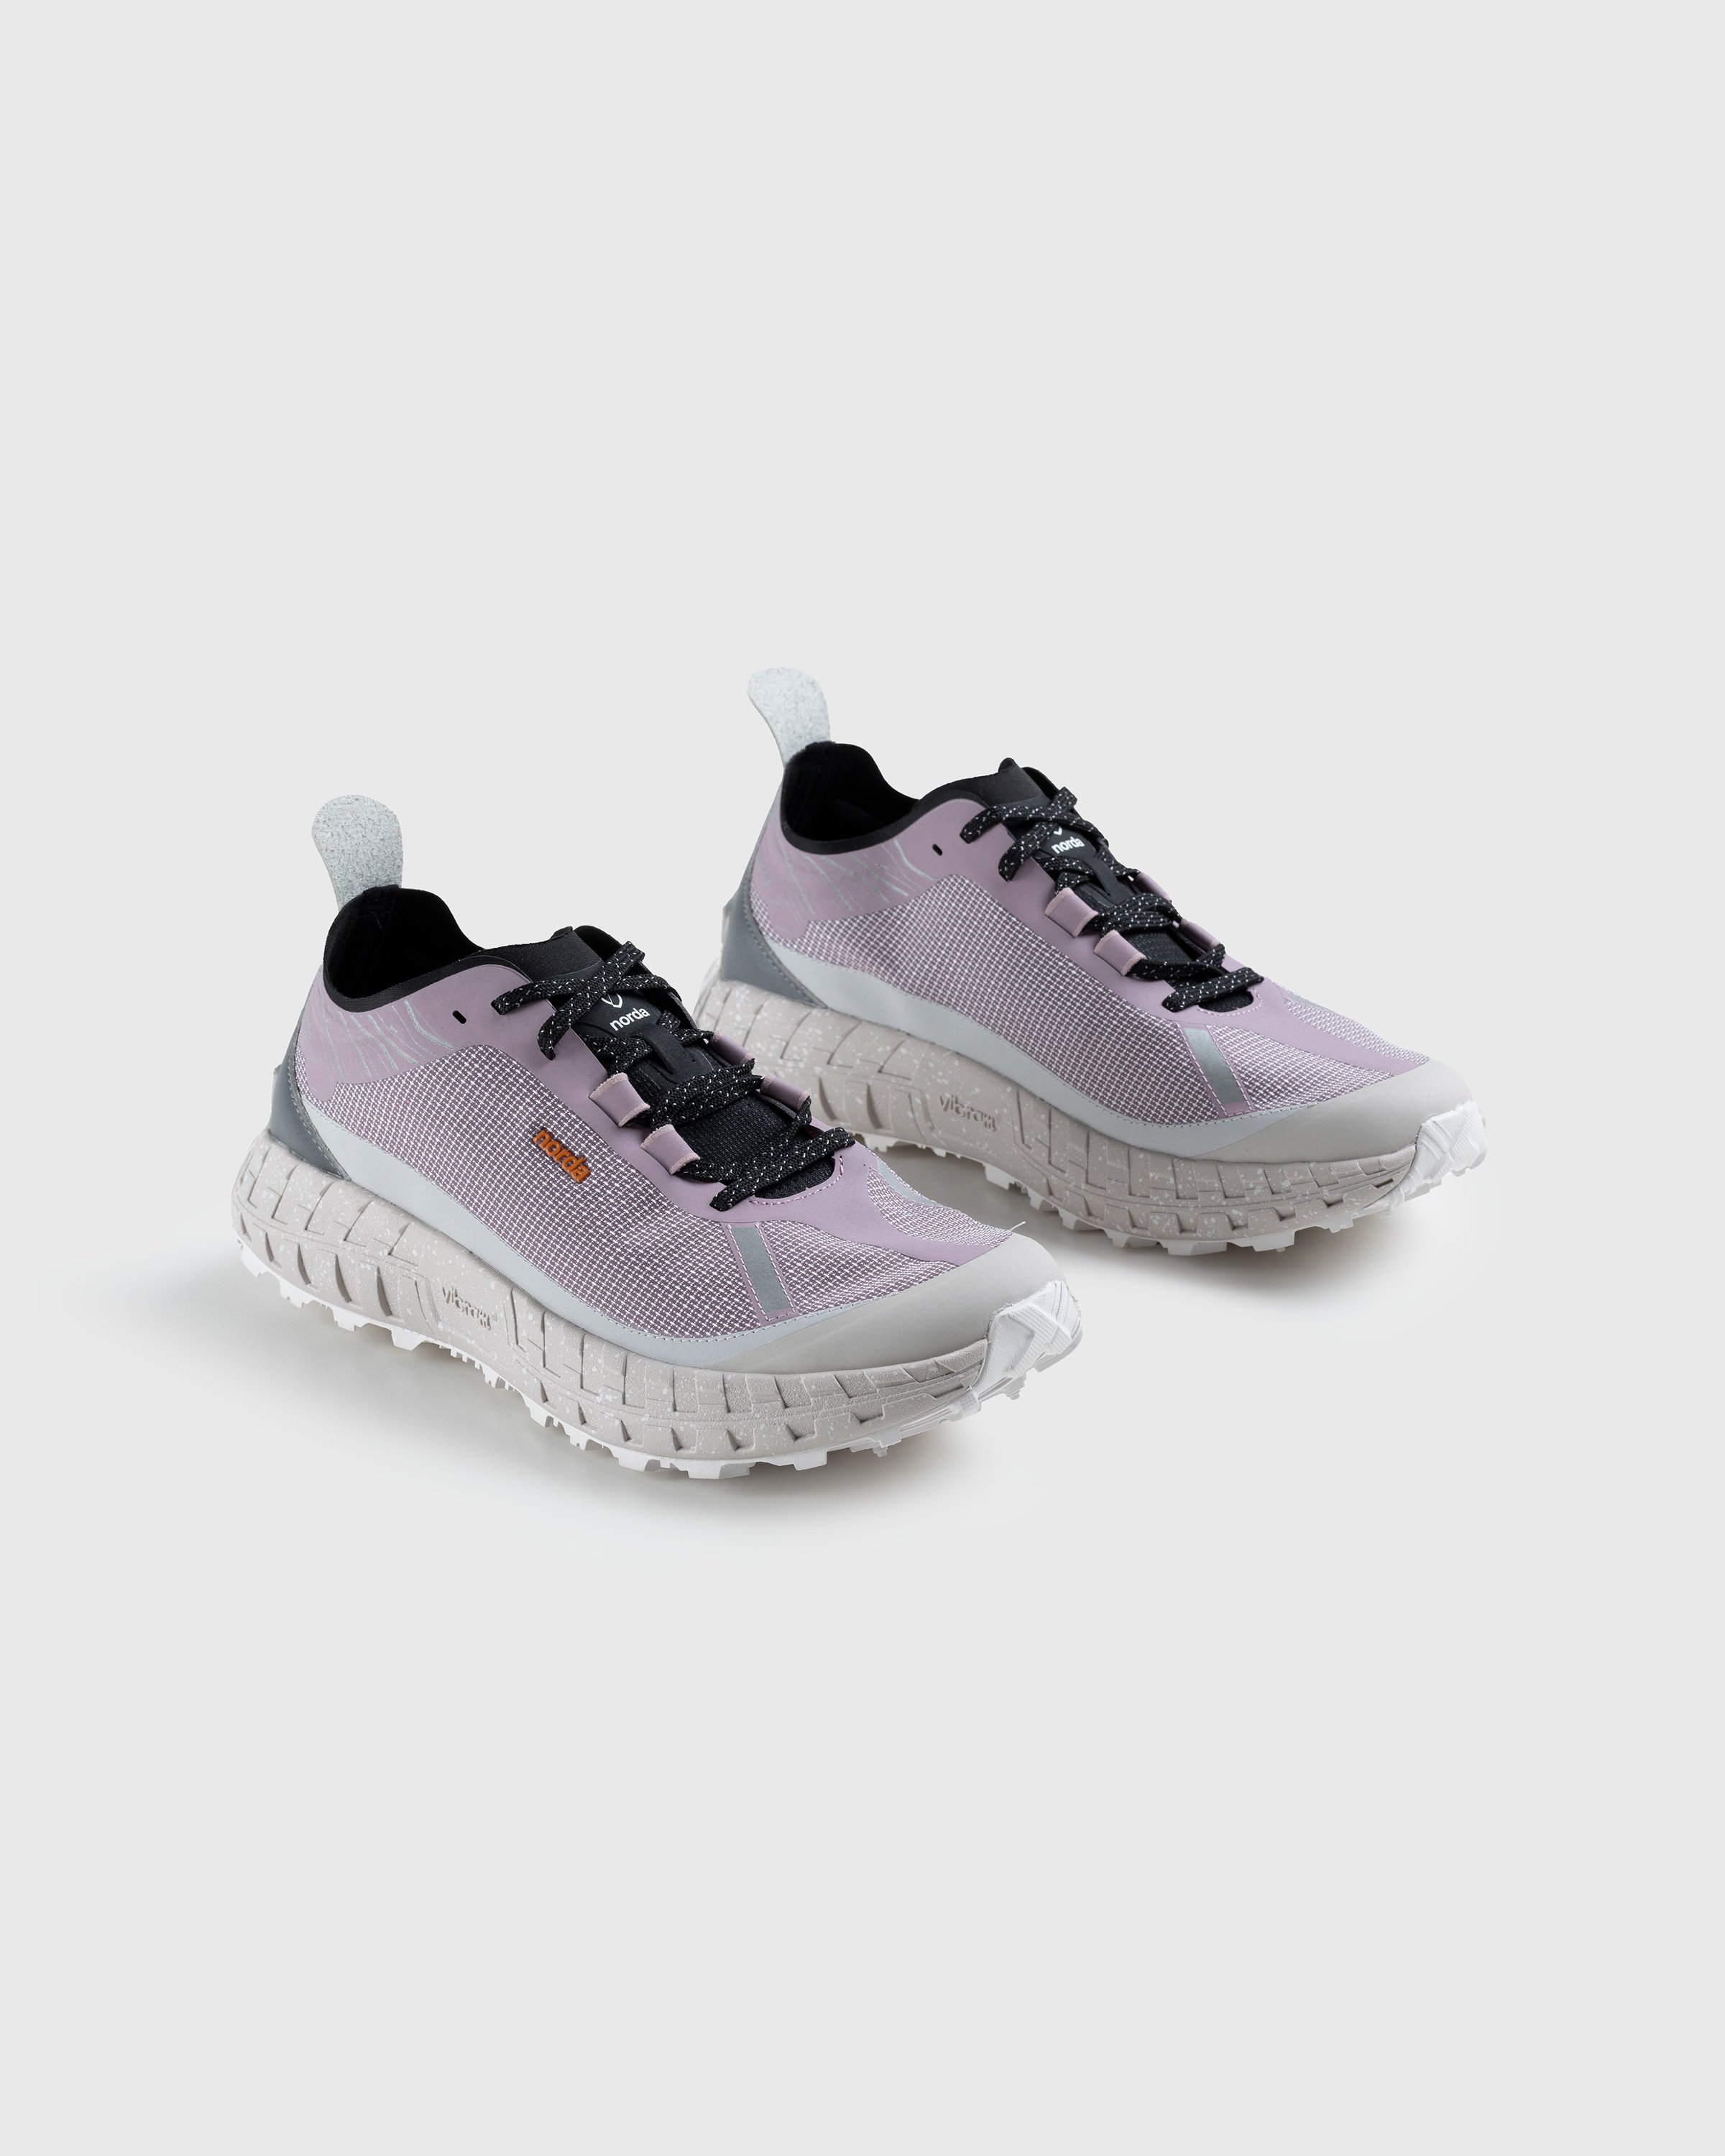 Norda - 001 W LTD Edition Lilac - Footwear - Purple - Image 3